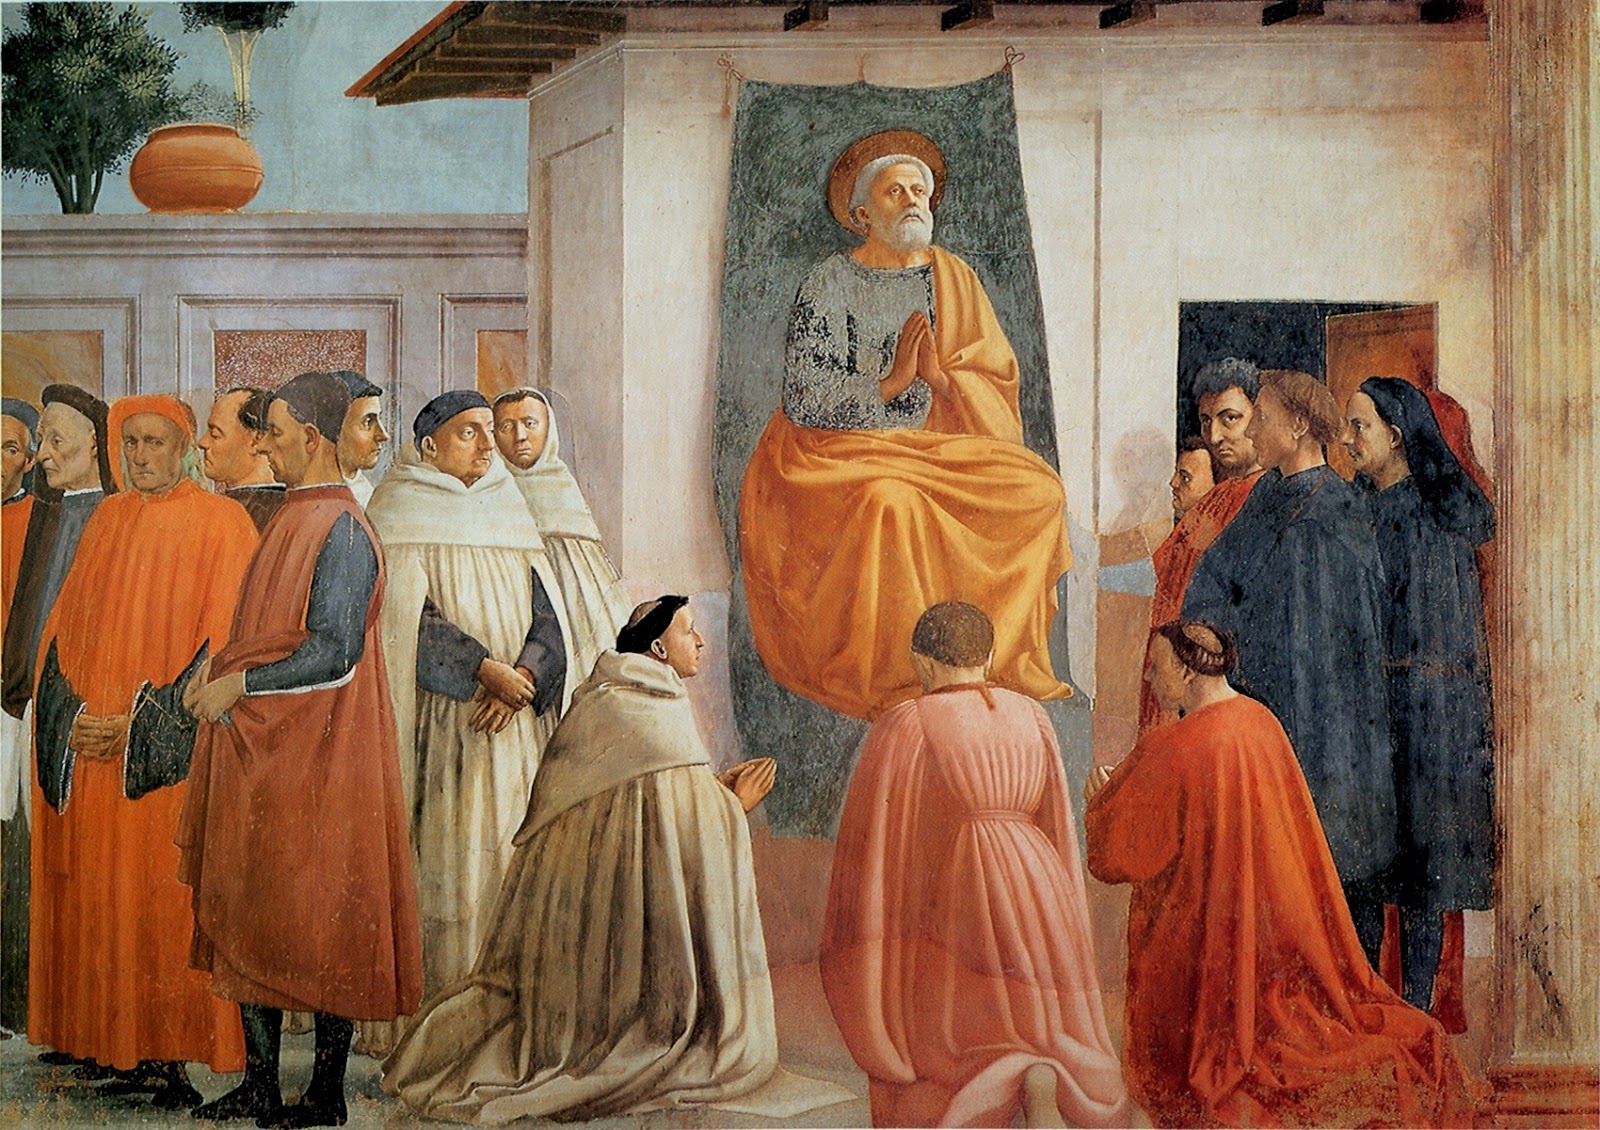 Masaccio-1401-1428 (31).jpg